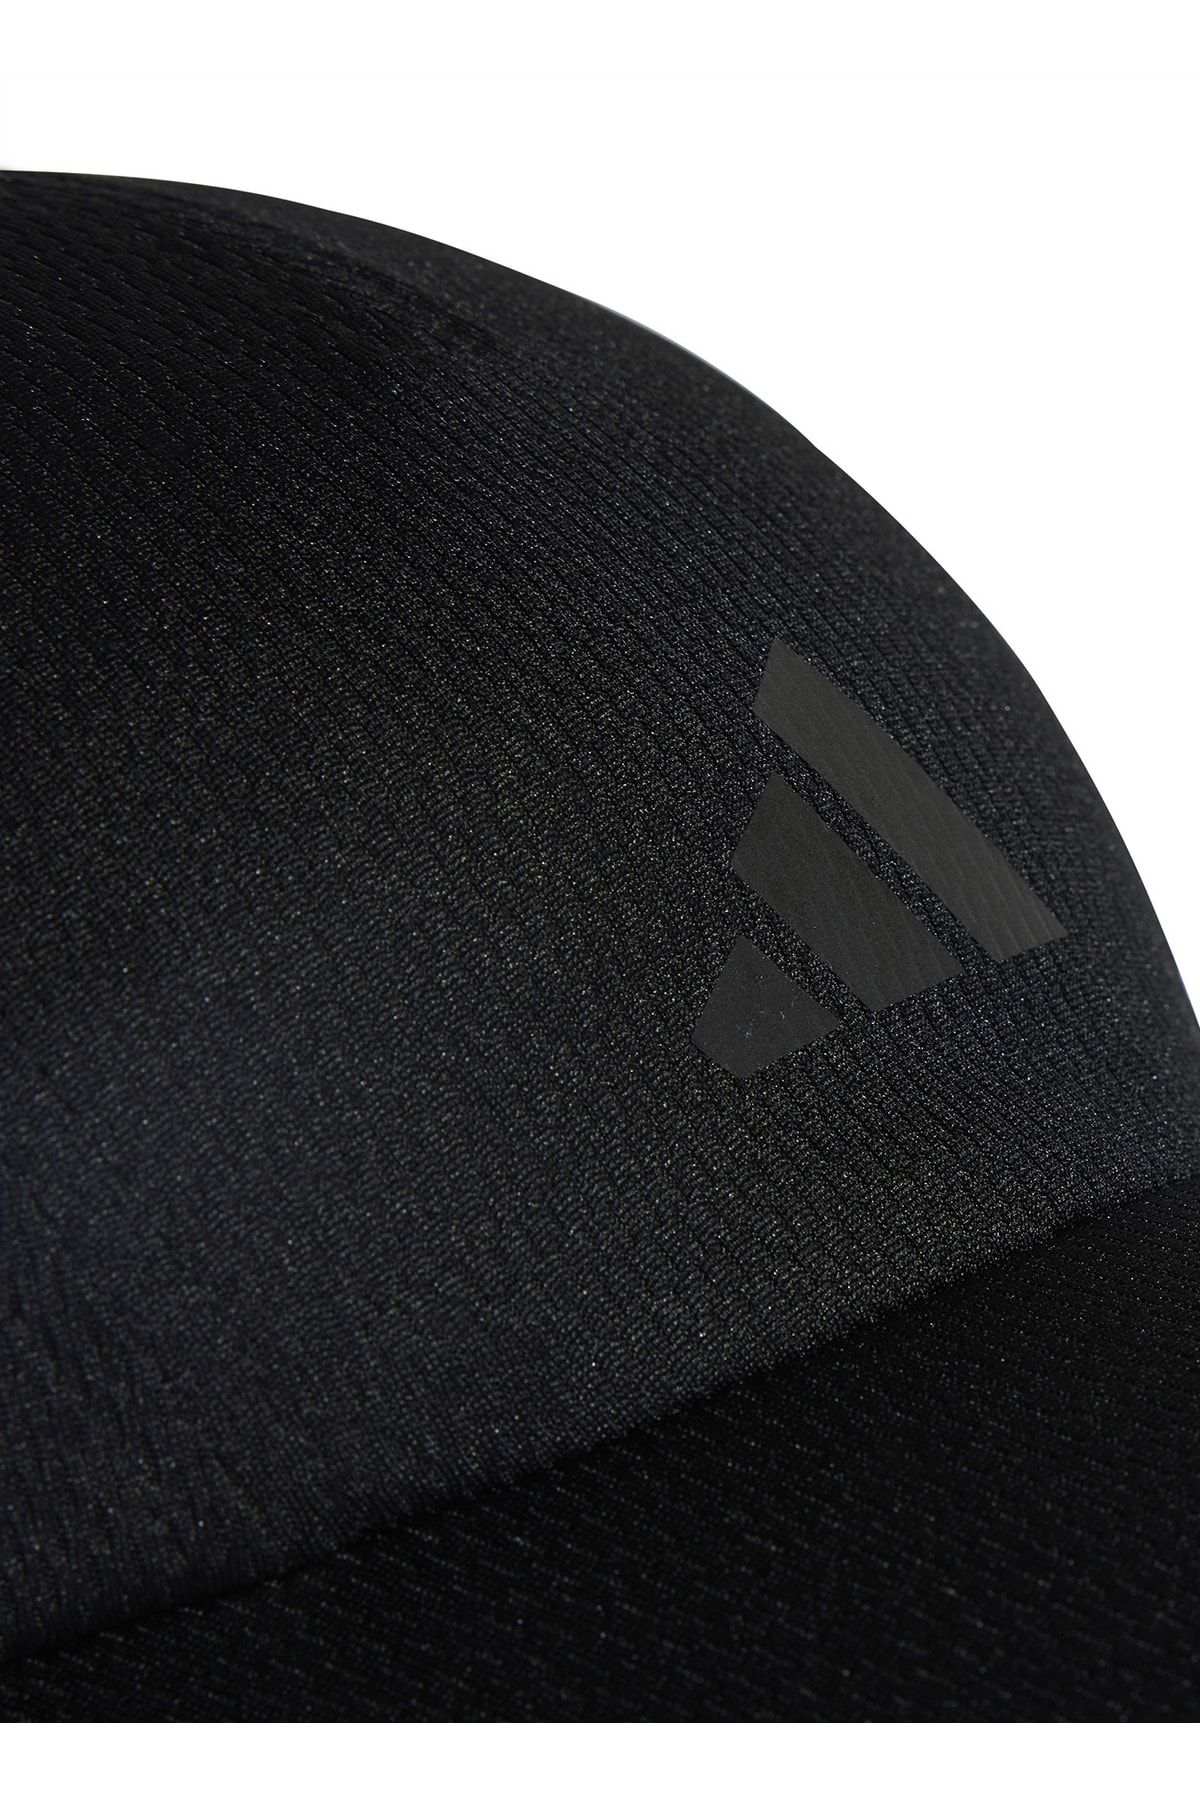 adidas کلاه سیاه یونیزکس ht4815 run mes ca a.r.